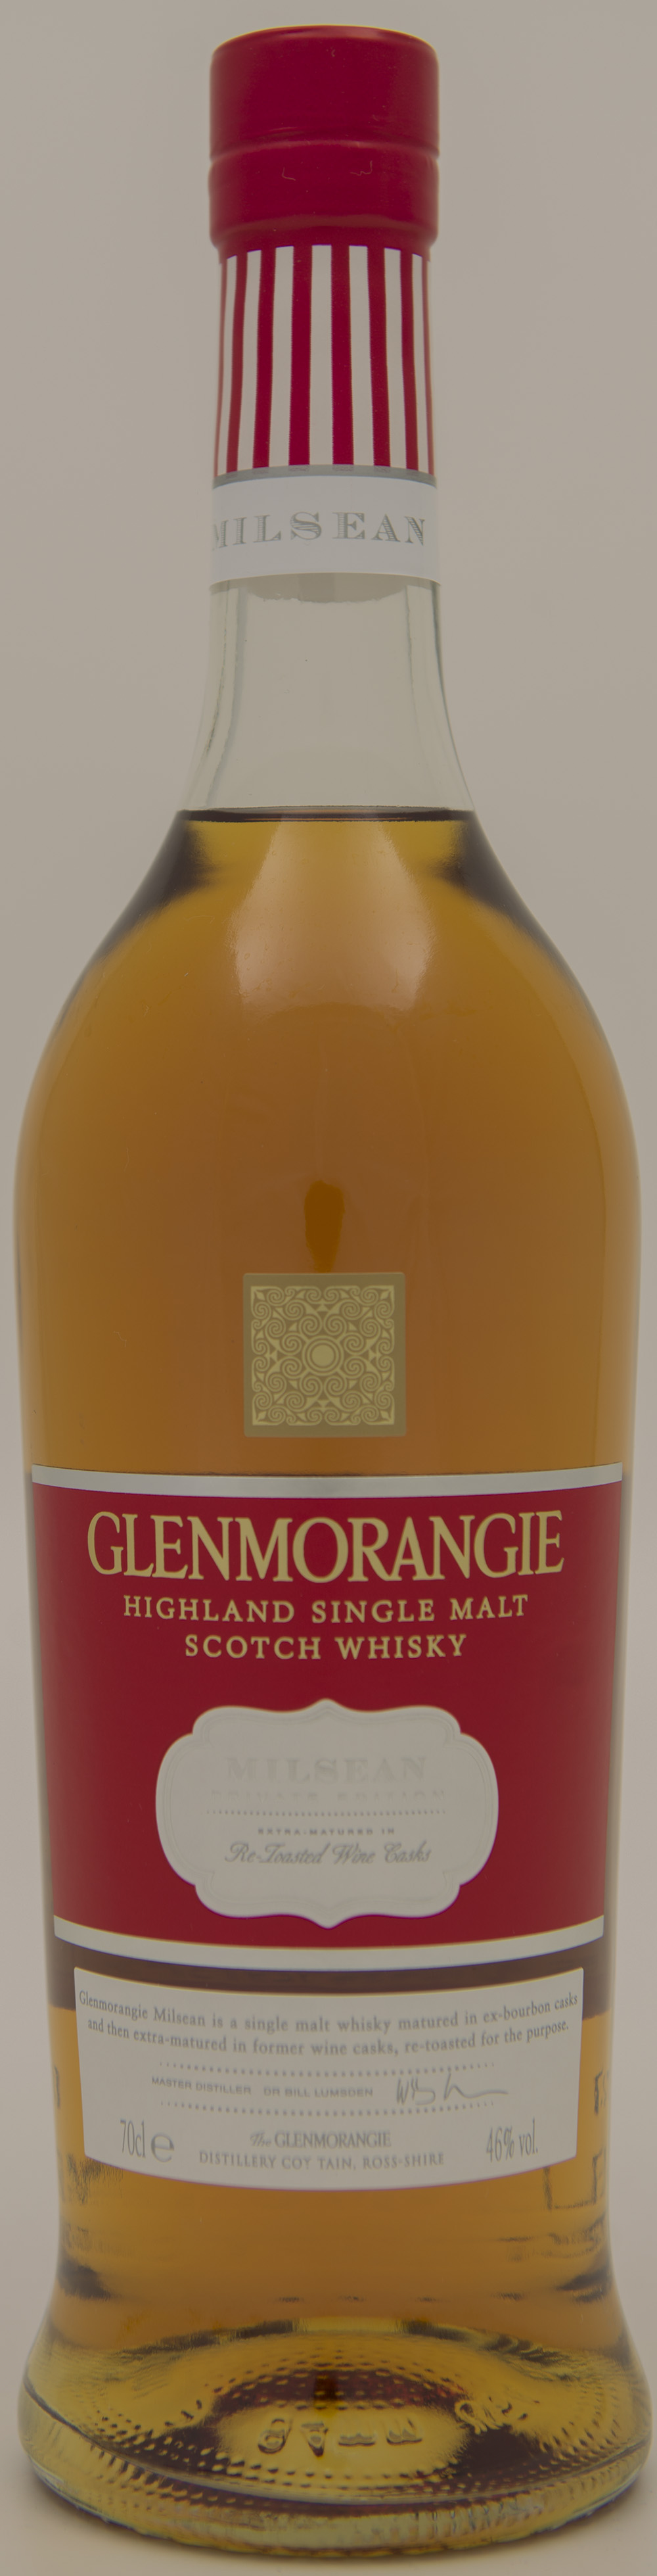 Billede: DSC_1105 - Glenmorangie Milsean - bottle front.jpg